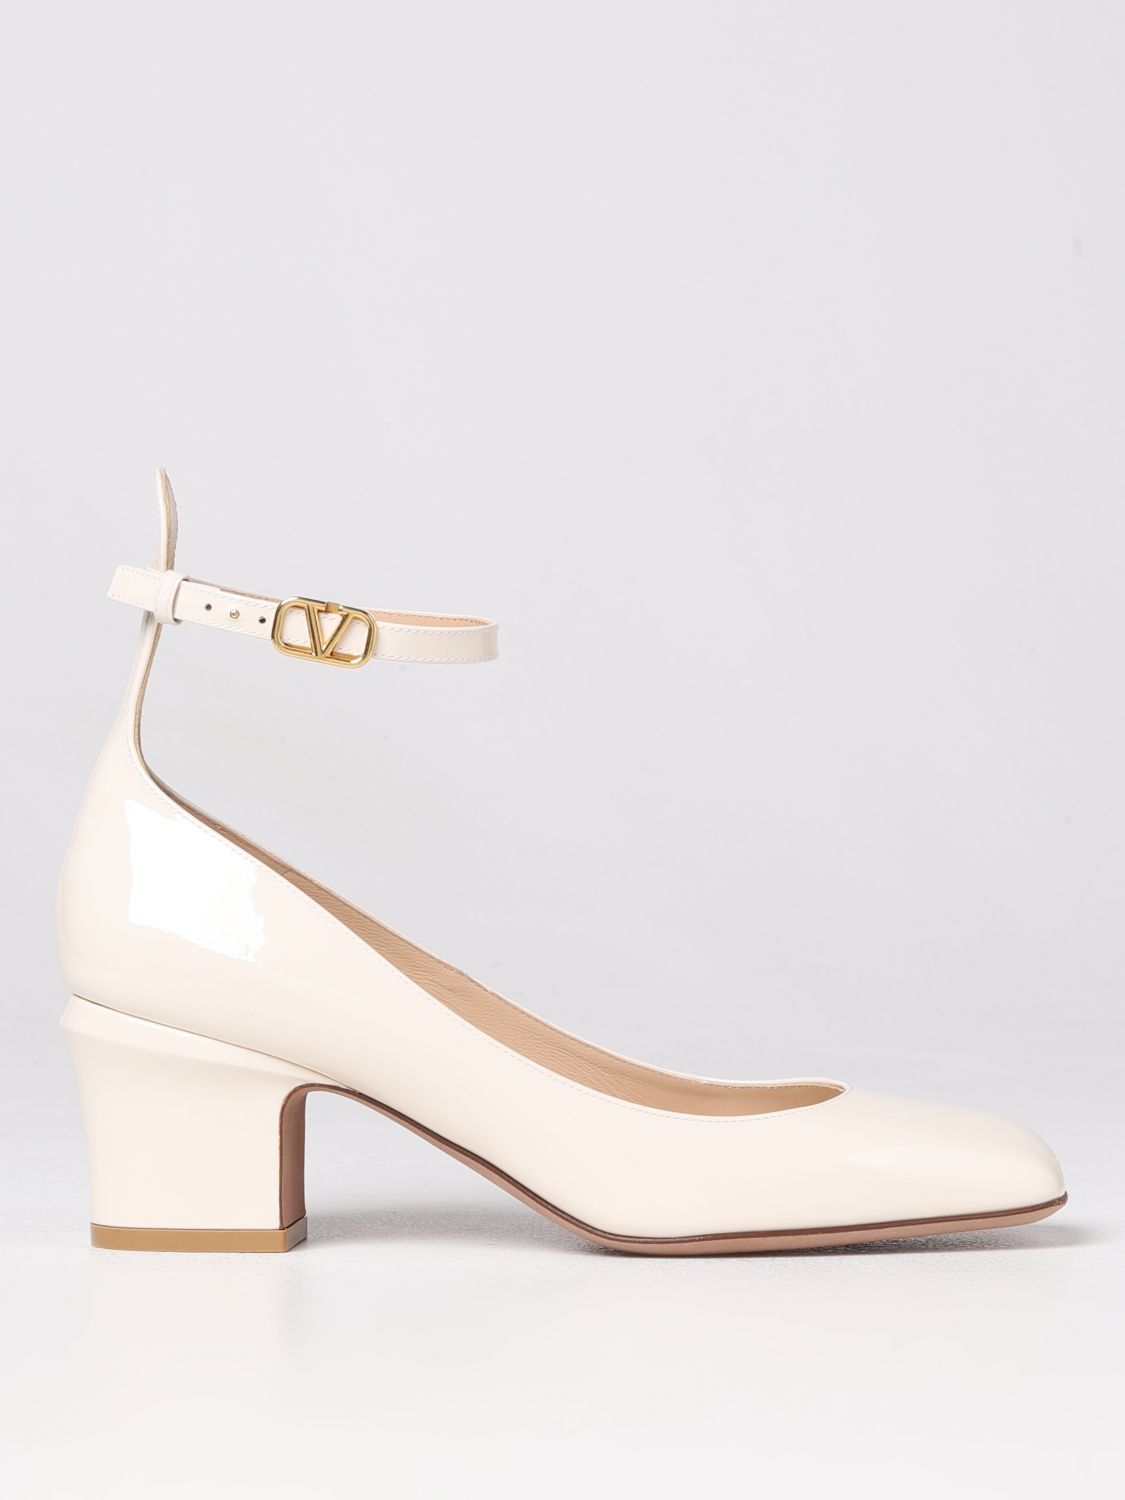 GARAVANI: Tan-Go VLogo pumps in patent leather - Ivory | Valentino Garavani high heel shoes 2W2S0FW9VNE online on GIGLIO.COM